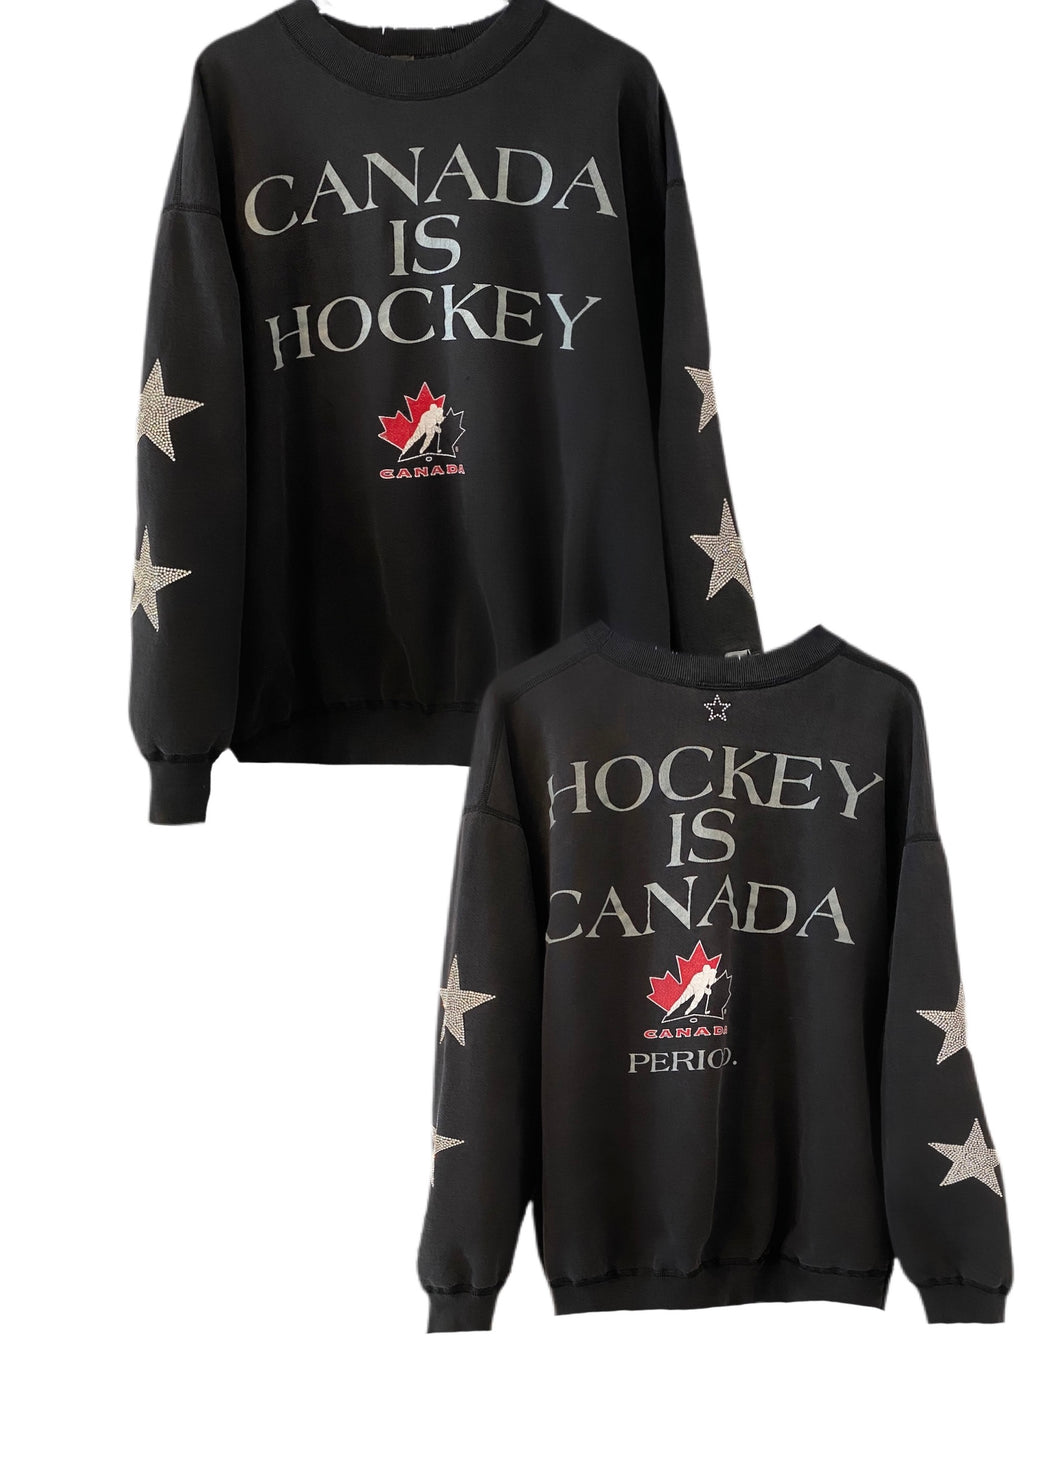 Canada is Hockey, NHL One of a KIND Vintage Sweatshirt with Crystal Star Design